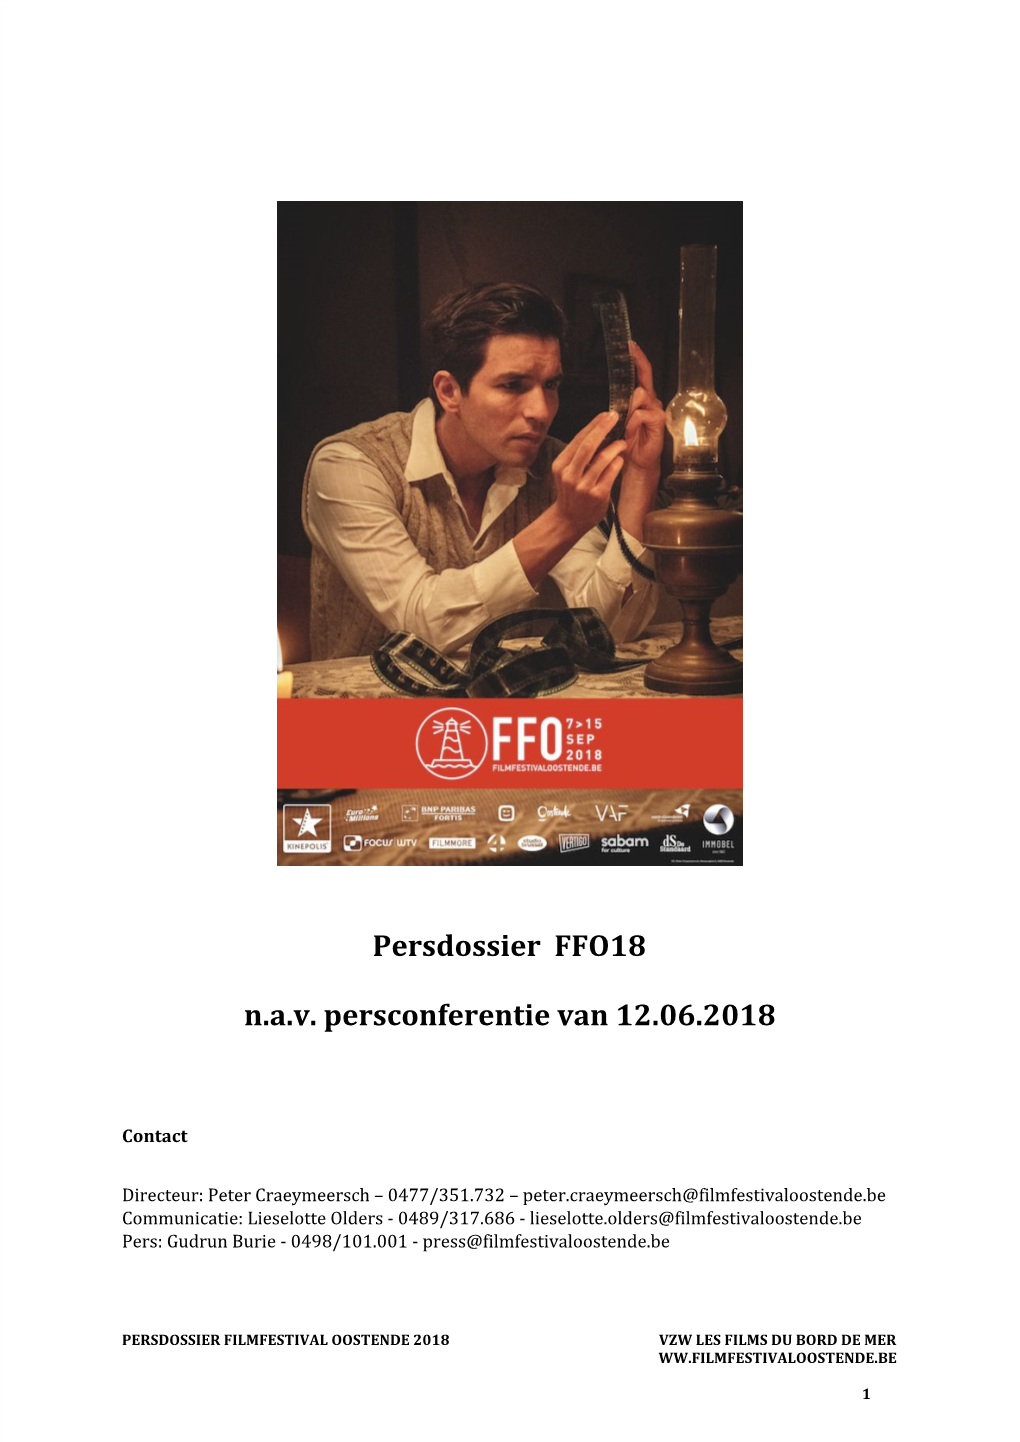 Persdossier FFO18 N.A.V. Persconferentie Van 12.06.2018